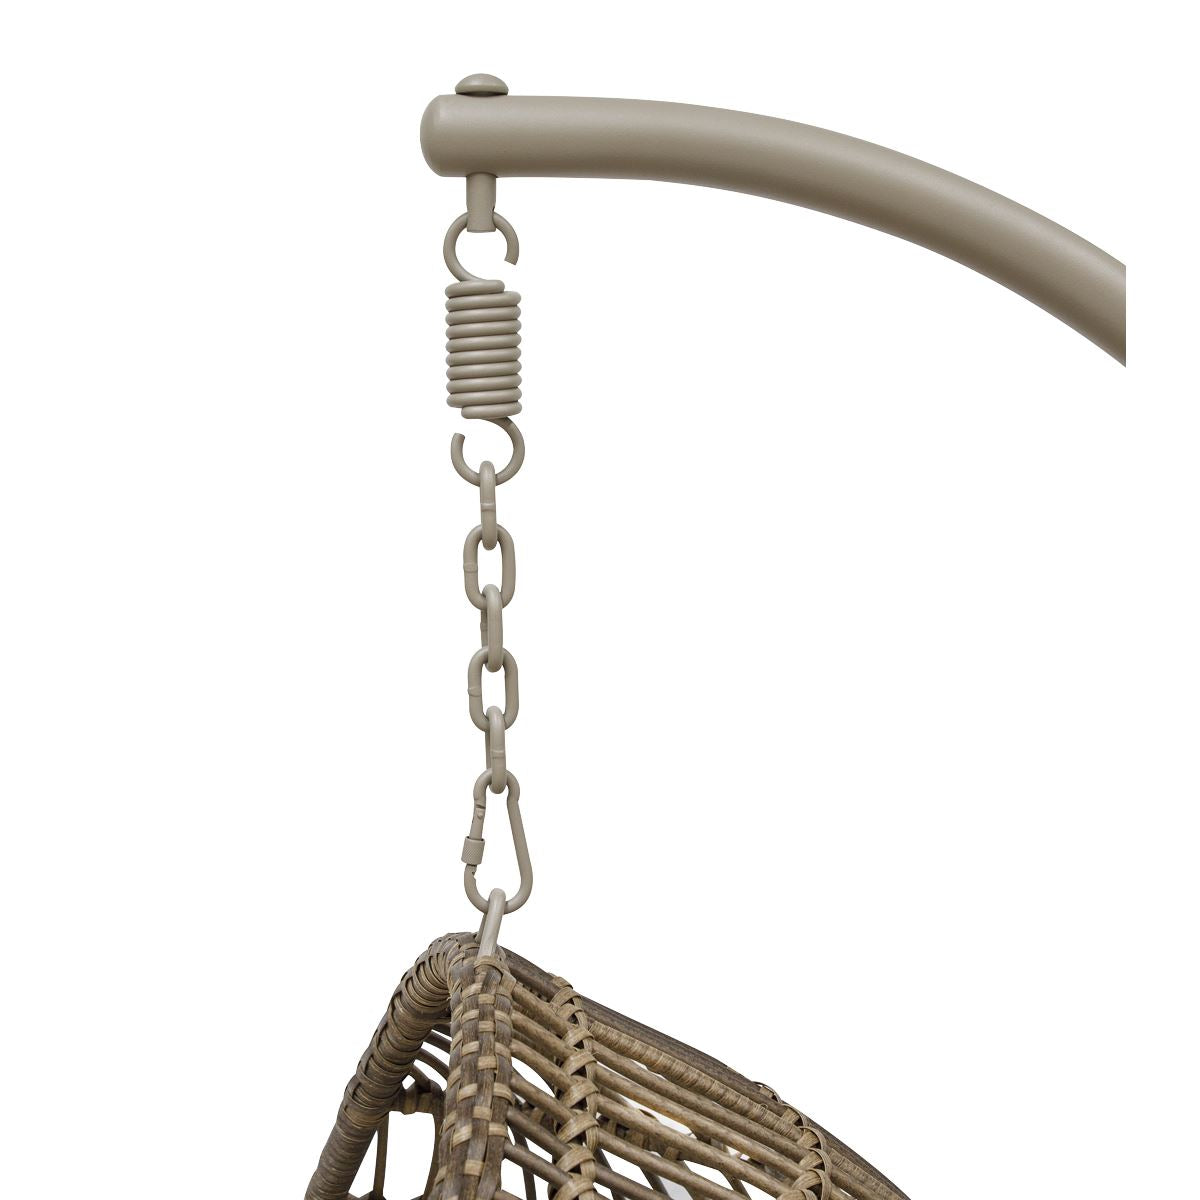 Dellonda Egg Hanging Swing Chair, Wicker Rattan Basket, Steel Frame, Single